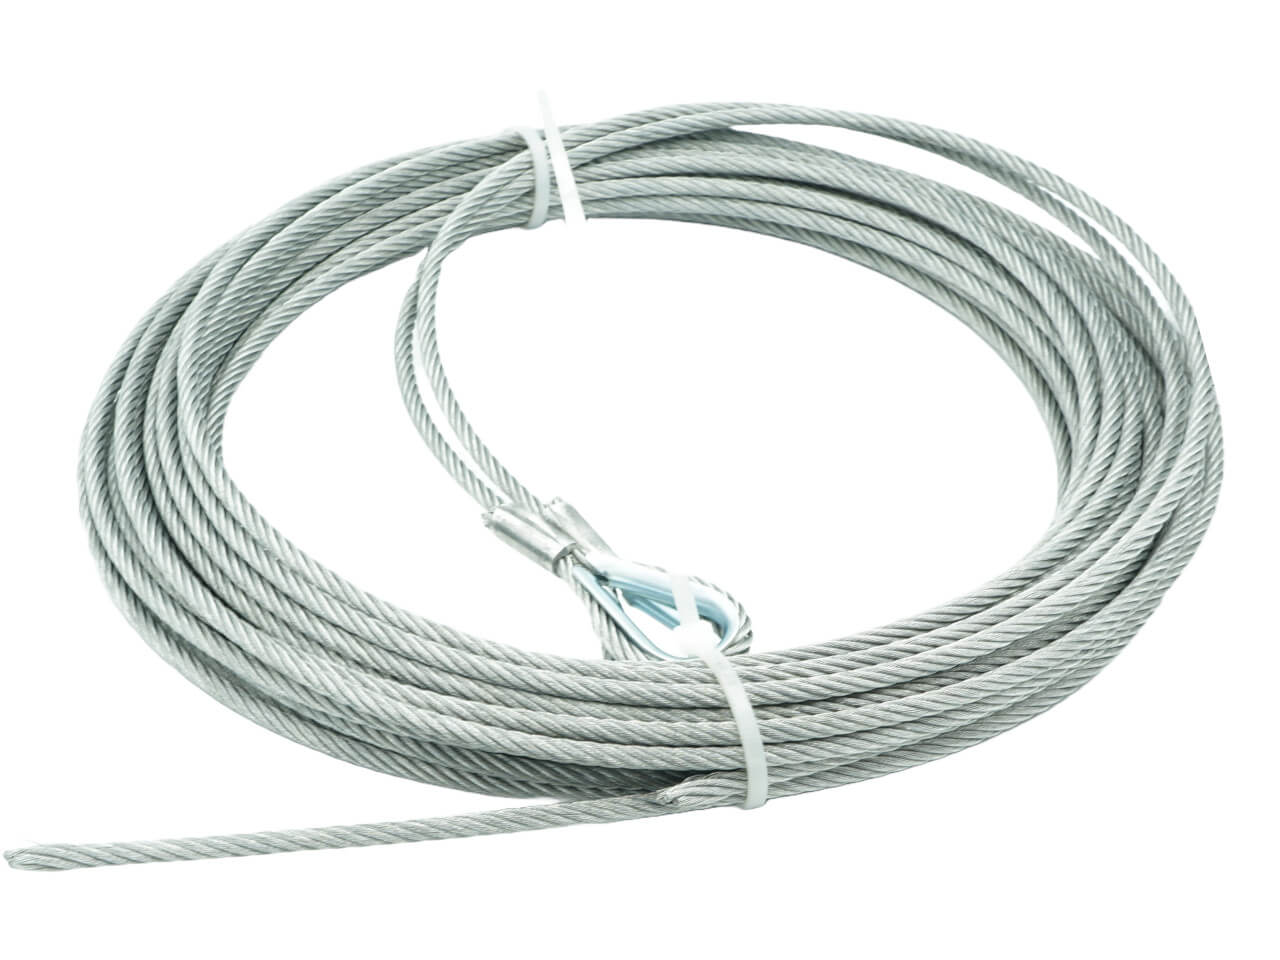 Cable Diameter 4,0mm Length 8m